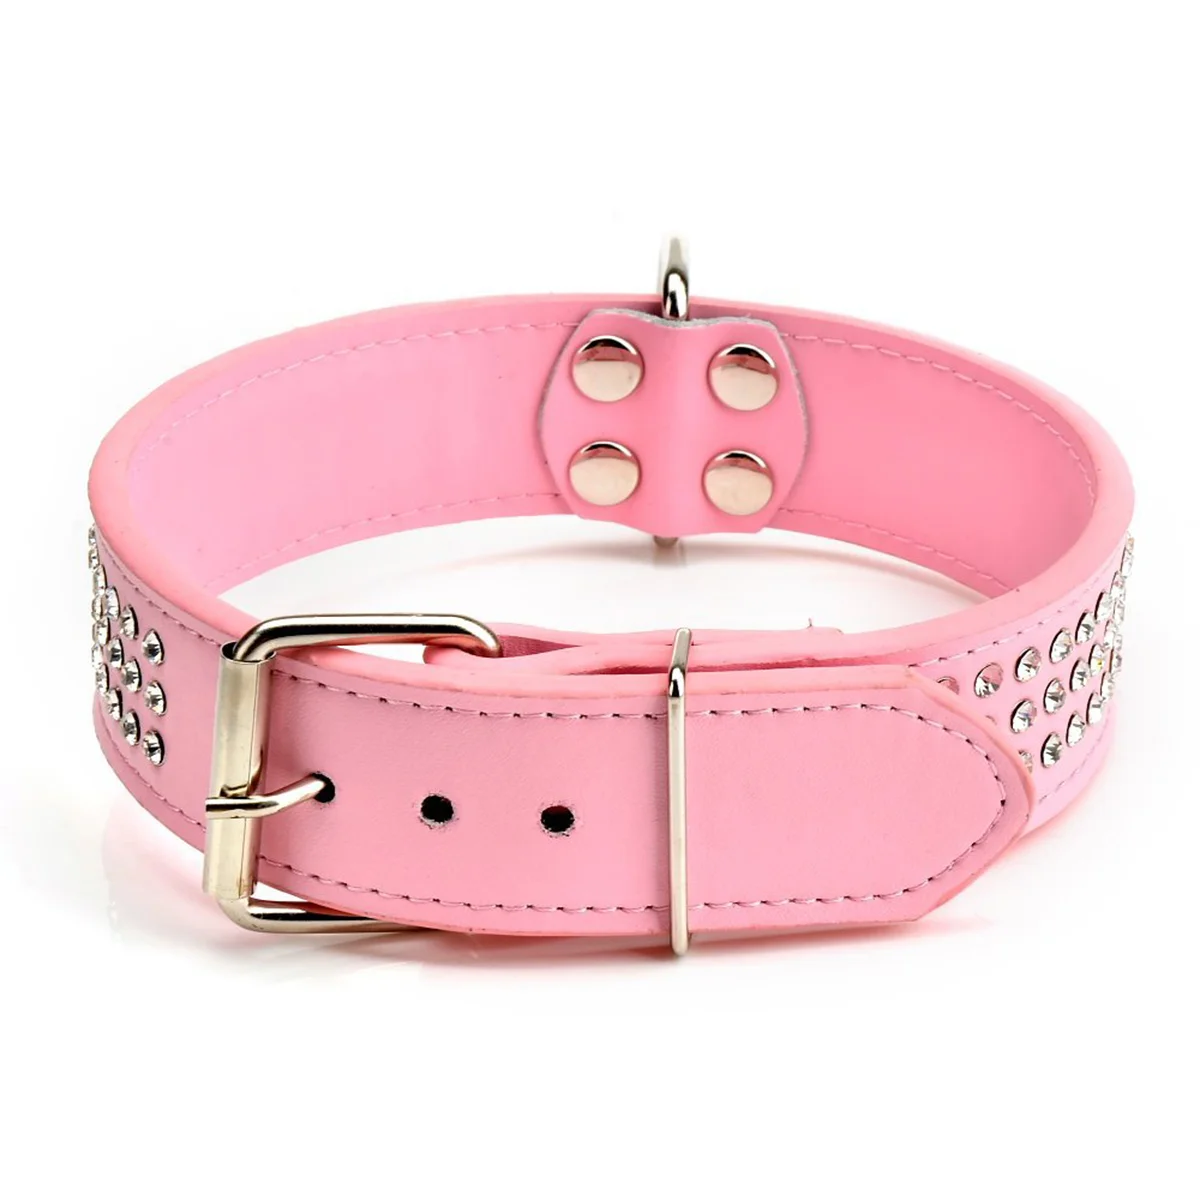 

Adjustable Three-row Rhinestone Studded PU Dog Collar - Size M (Pink)